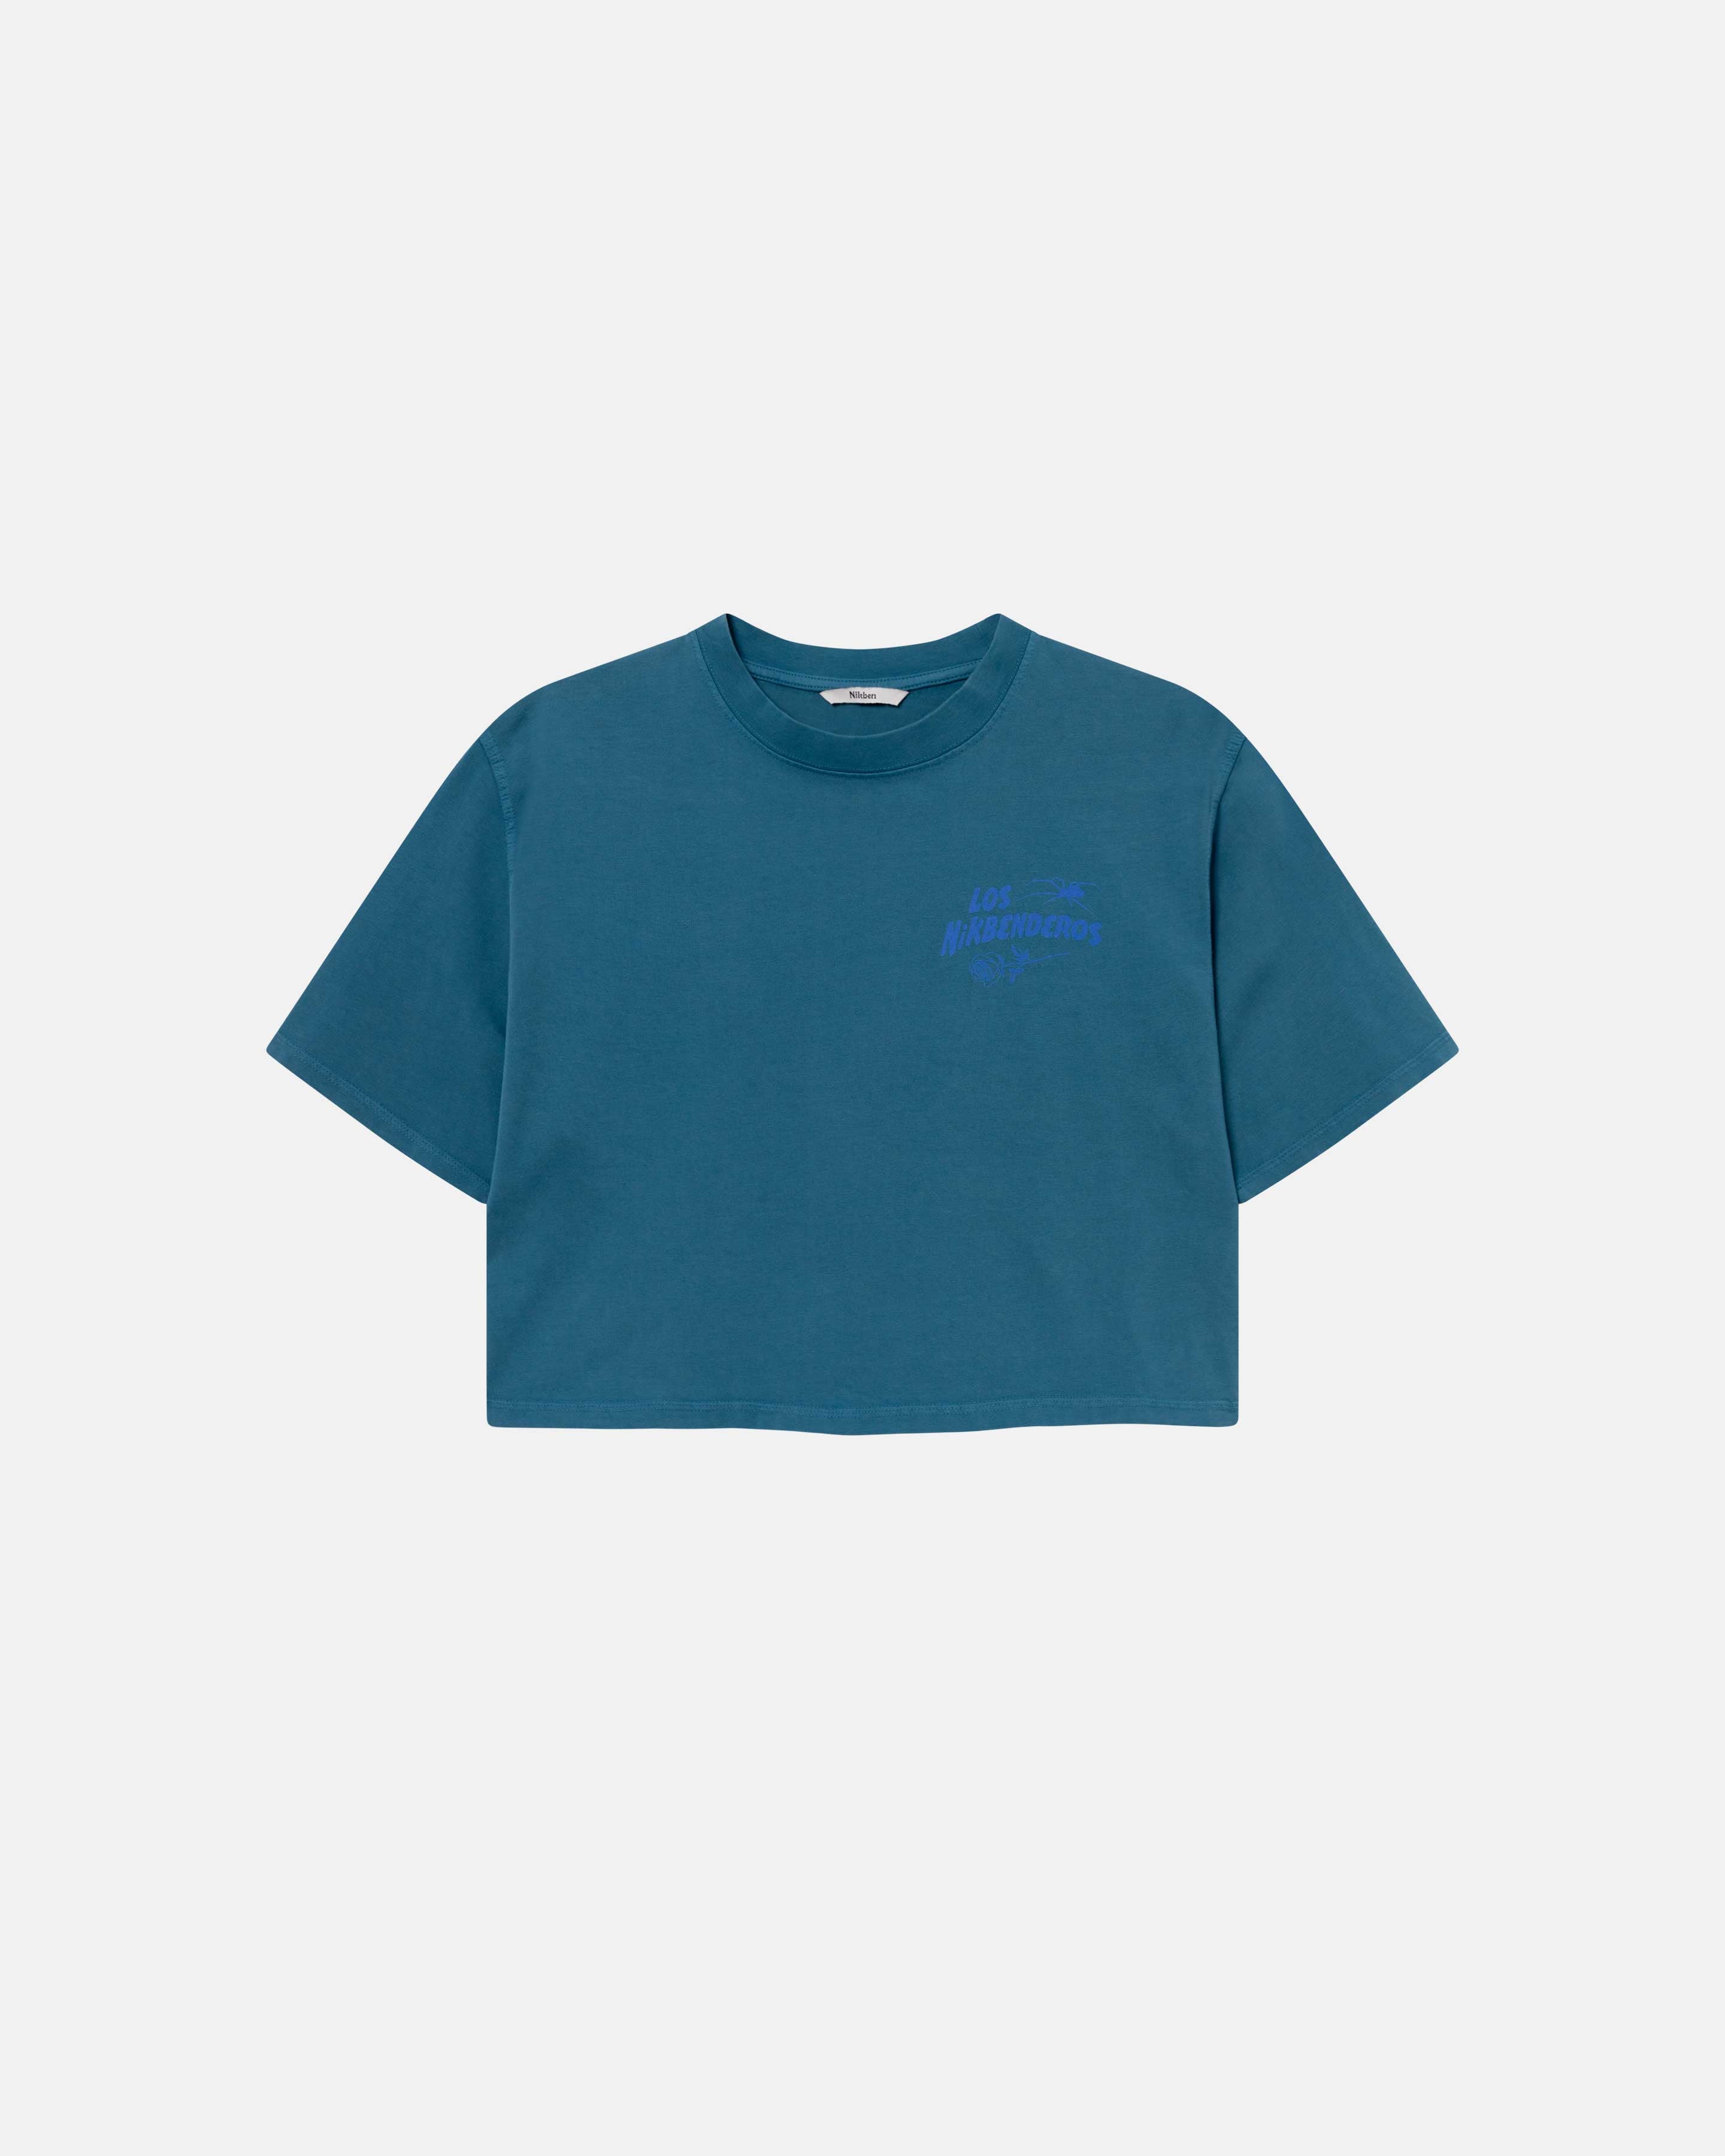 A navy blue cropped t-shirt blue 